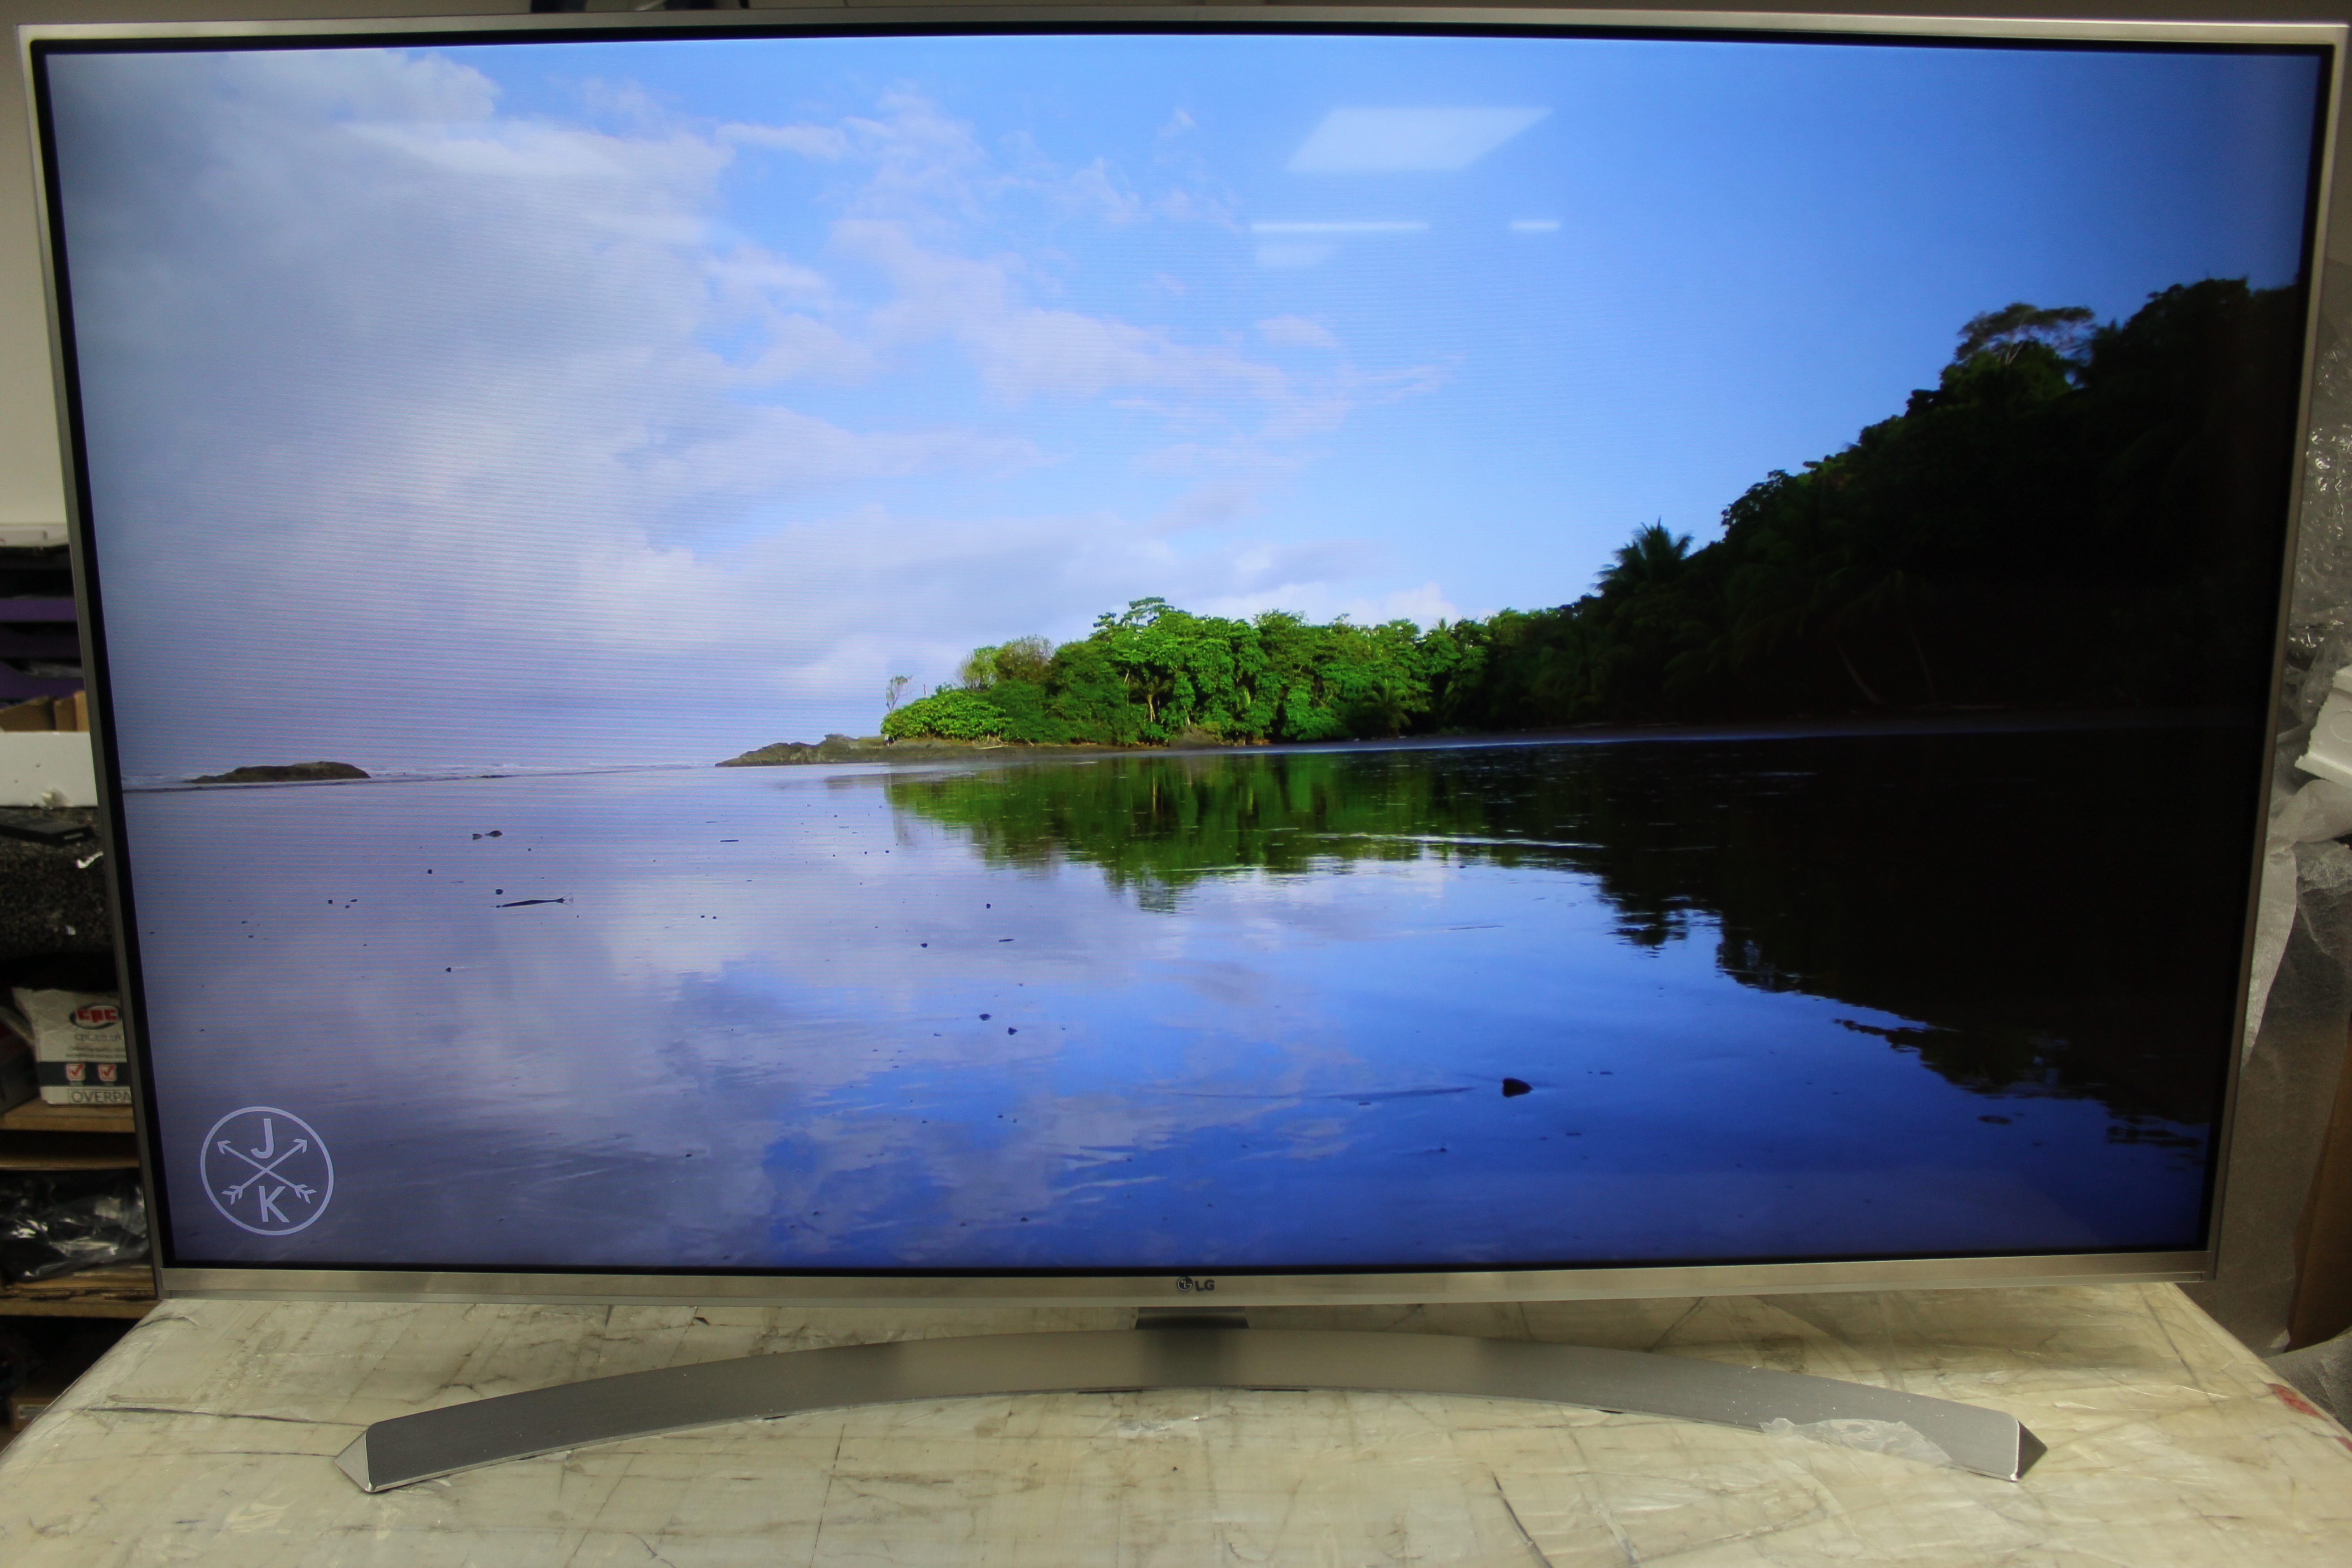 49" LG 49UH850V 4k Ultra HD Freeview HD HDR Smart 3D LED TV